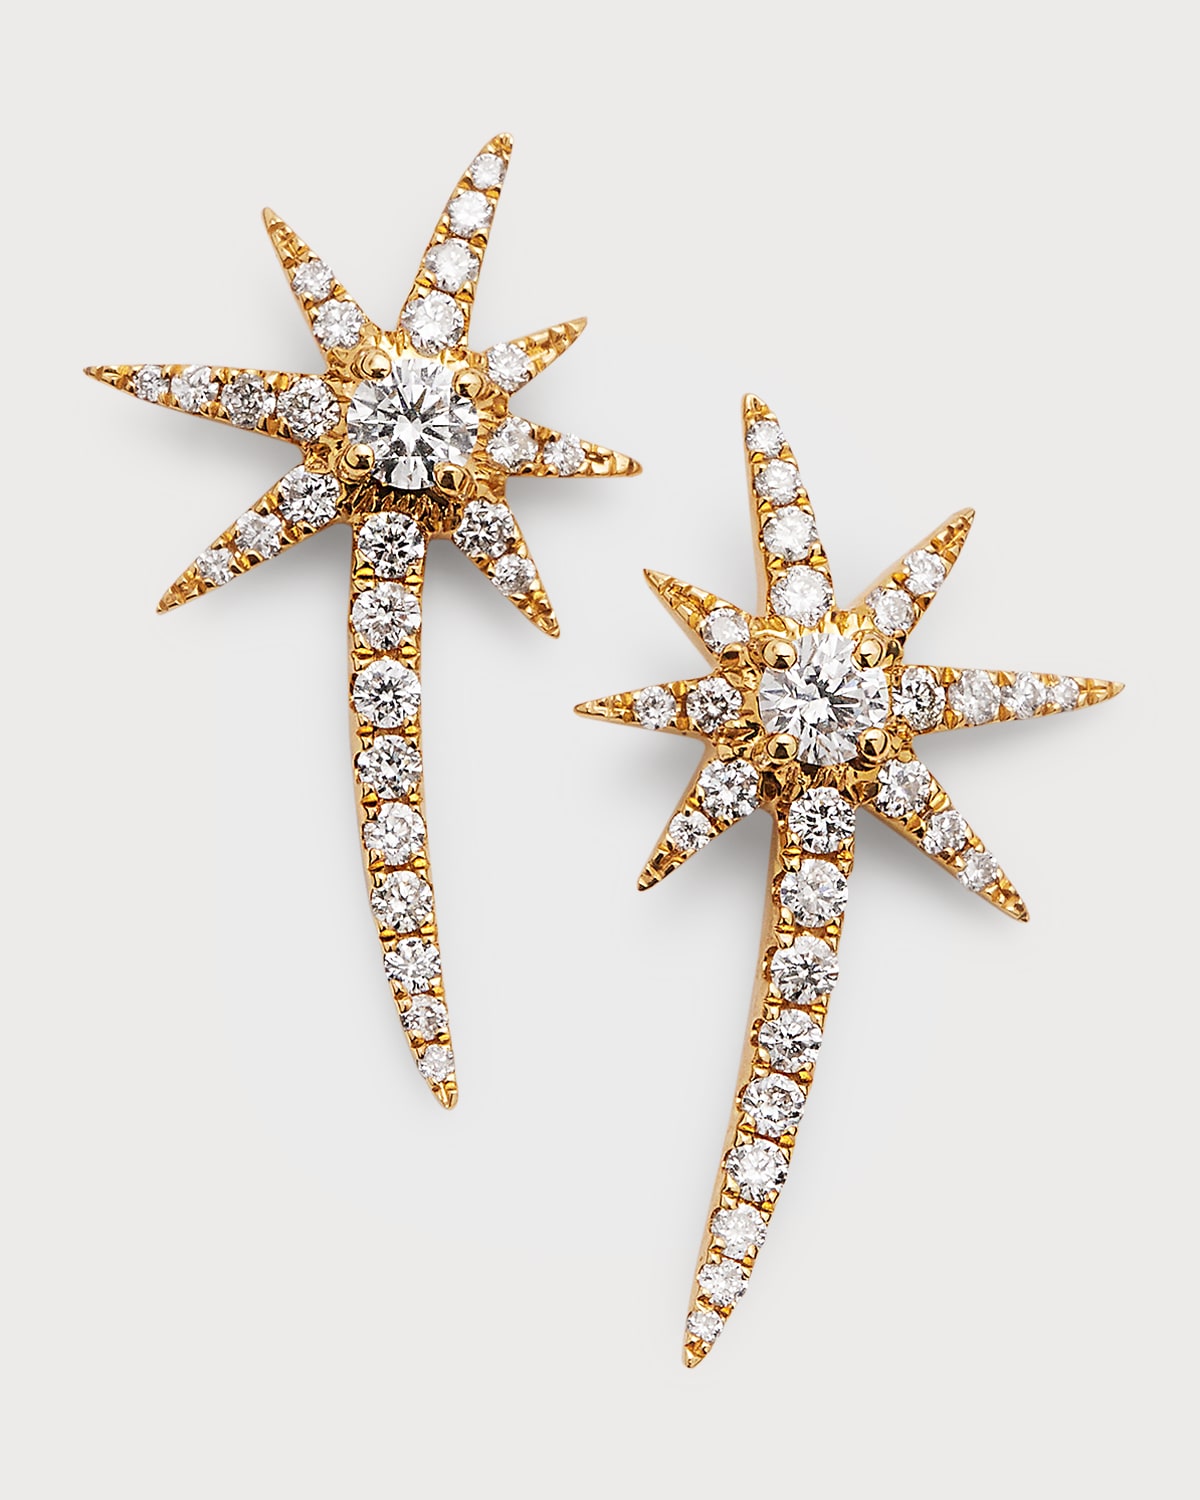 White Gold Shooting Starburst Earrings with Diamonds